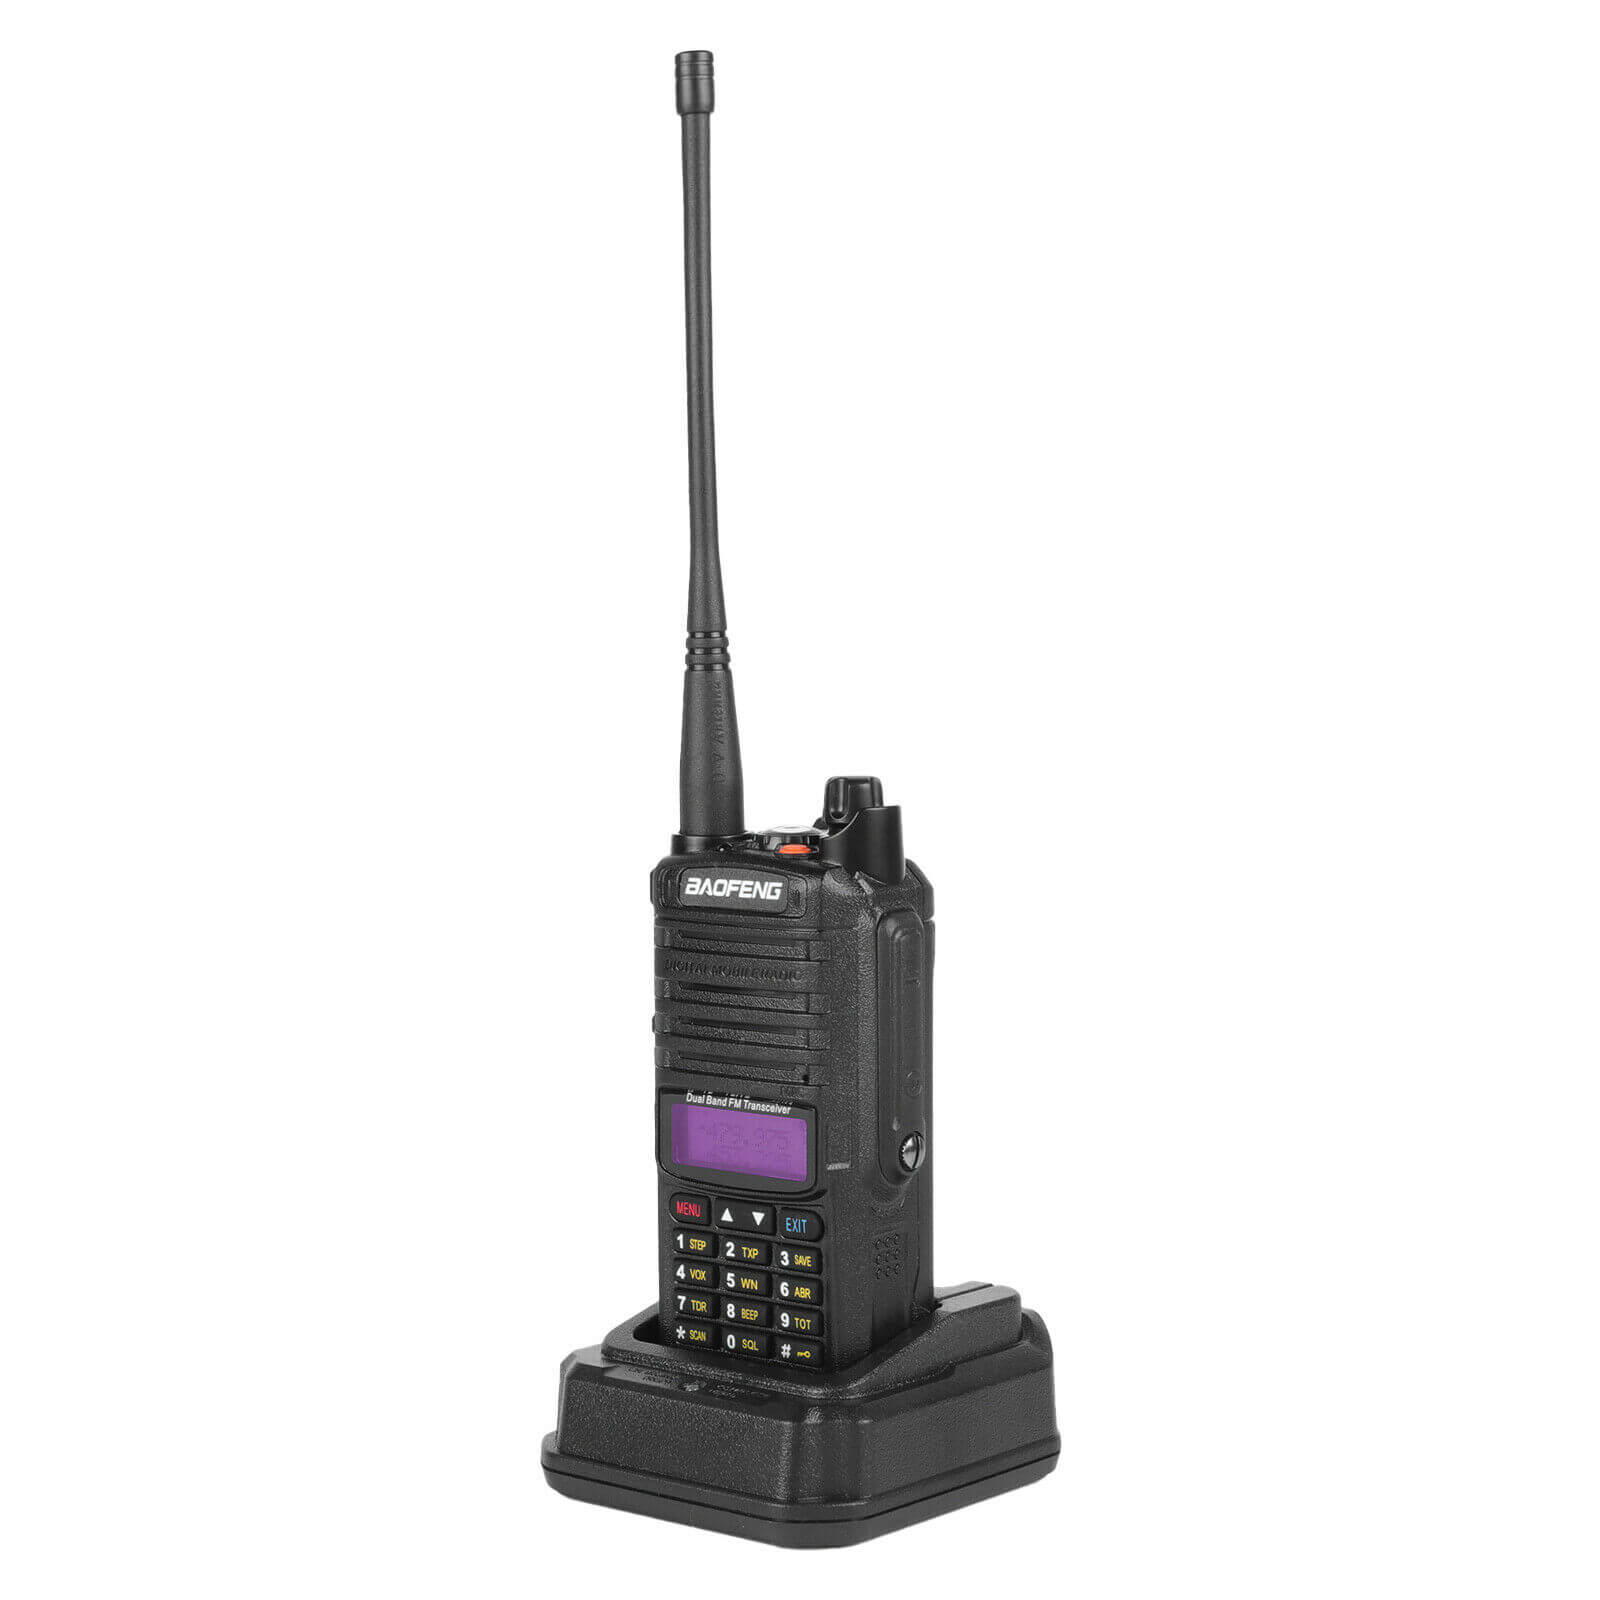 Showing of UV-9R Plus VHF UHF Walkie Talkie Dual-Band Handheld